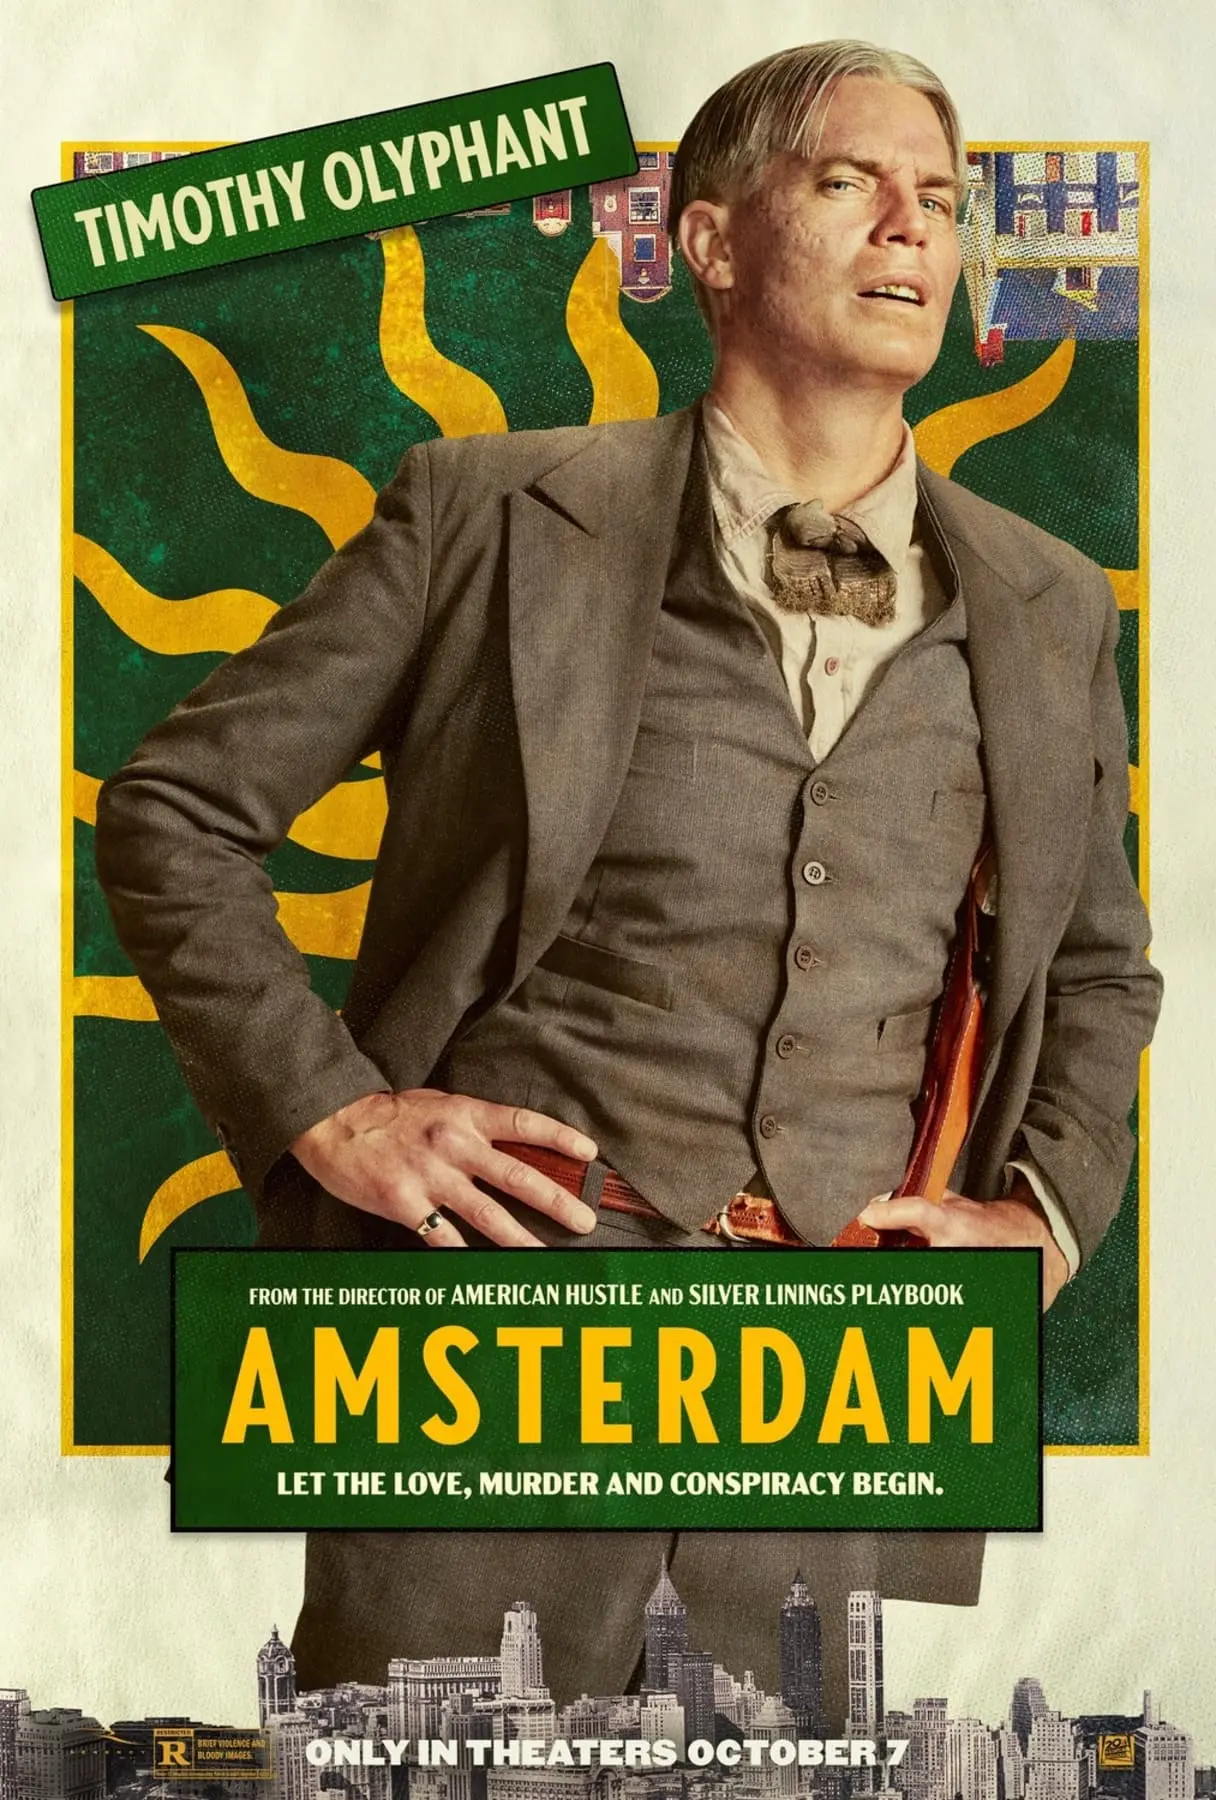 Affiche du film Amsterdam, doublage de timothy Olyphant